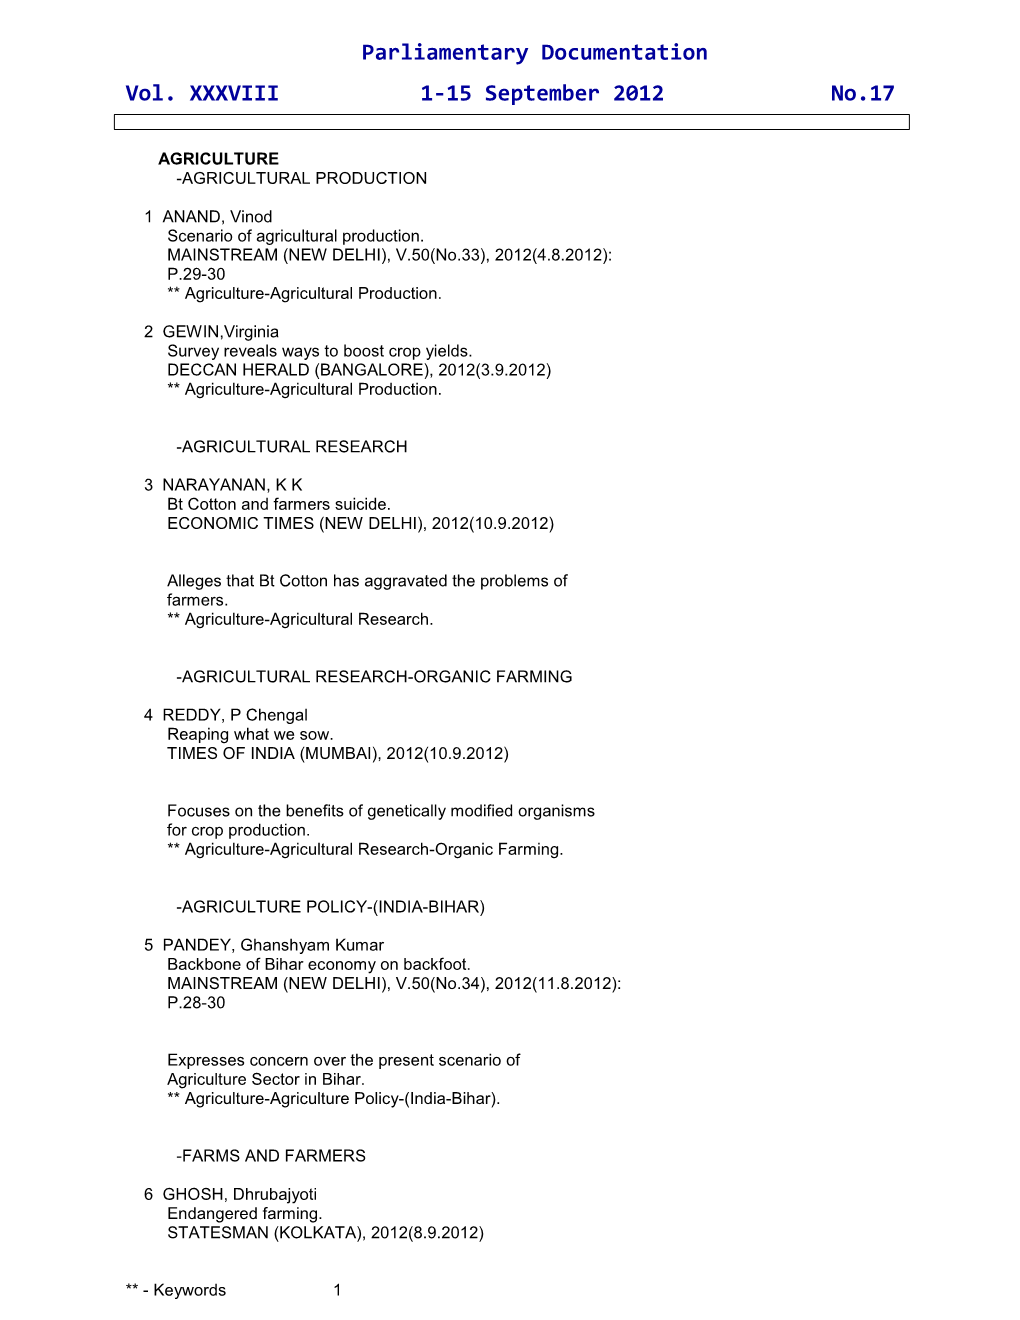 Parliamentary Documentation Vol. XXXVIII 1-15 September 2012 No.17